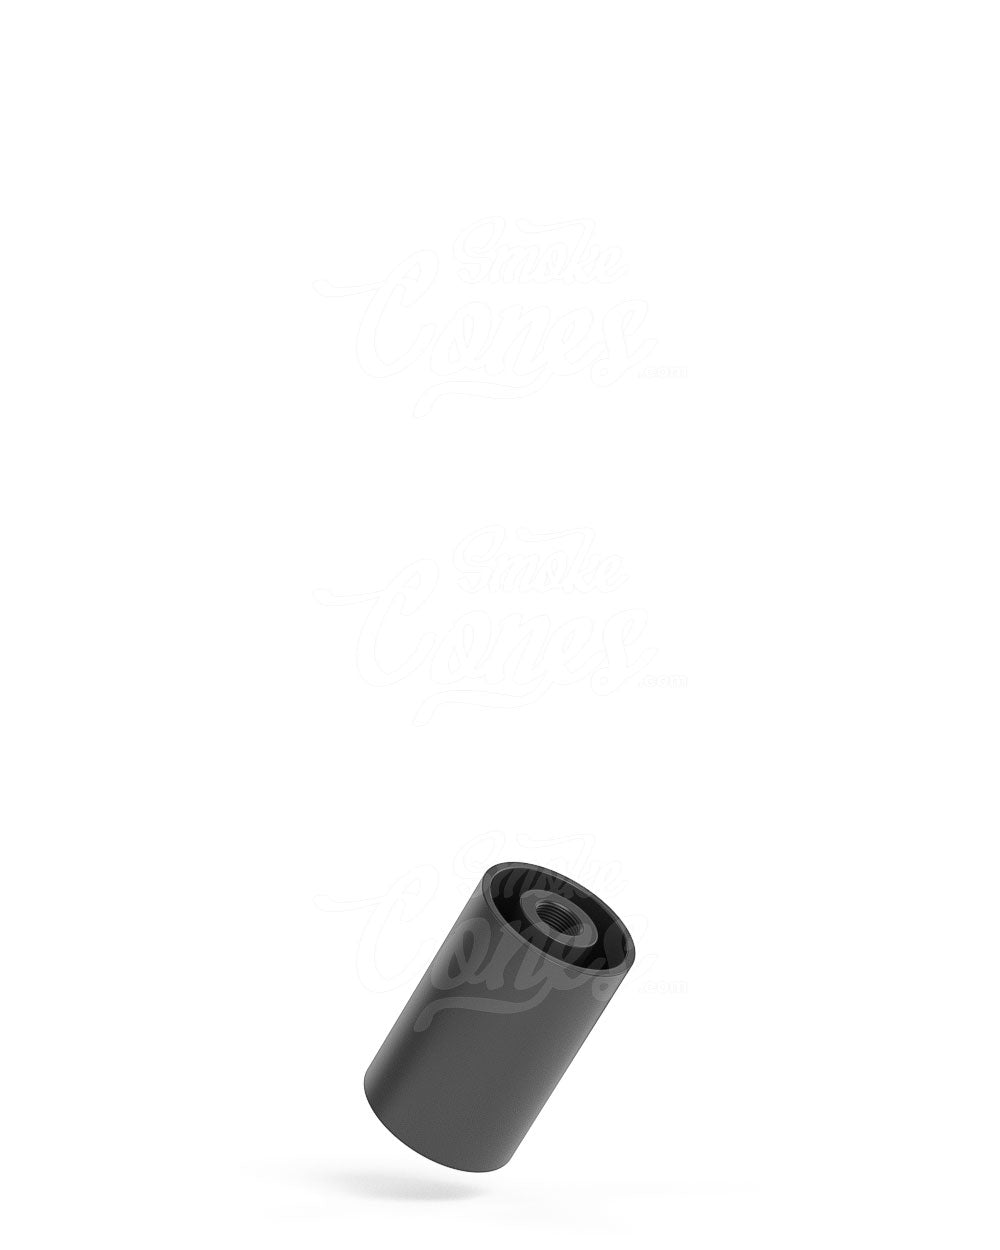 35mm Pollen Gear Five10 Child Resistant Flat Vape Cartridge Tube Base - Matte Black - 1400/Box - 1